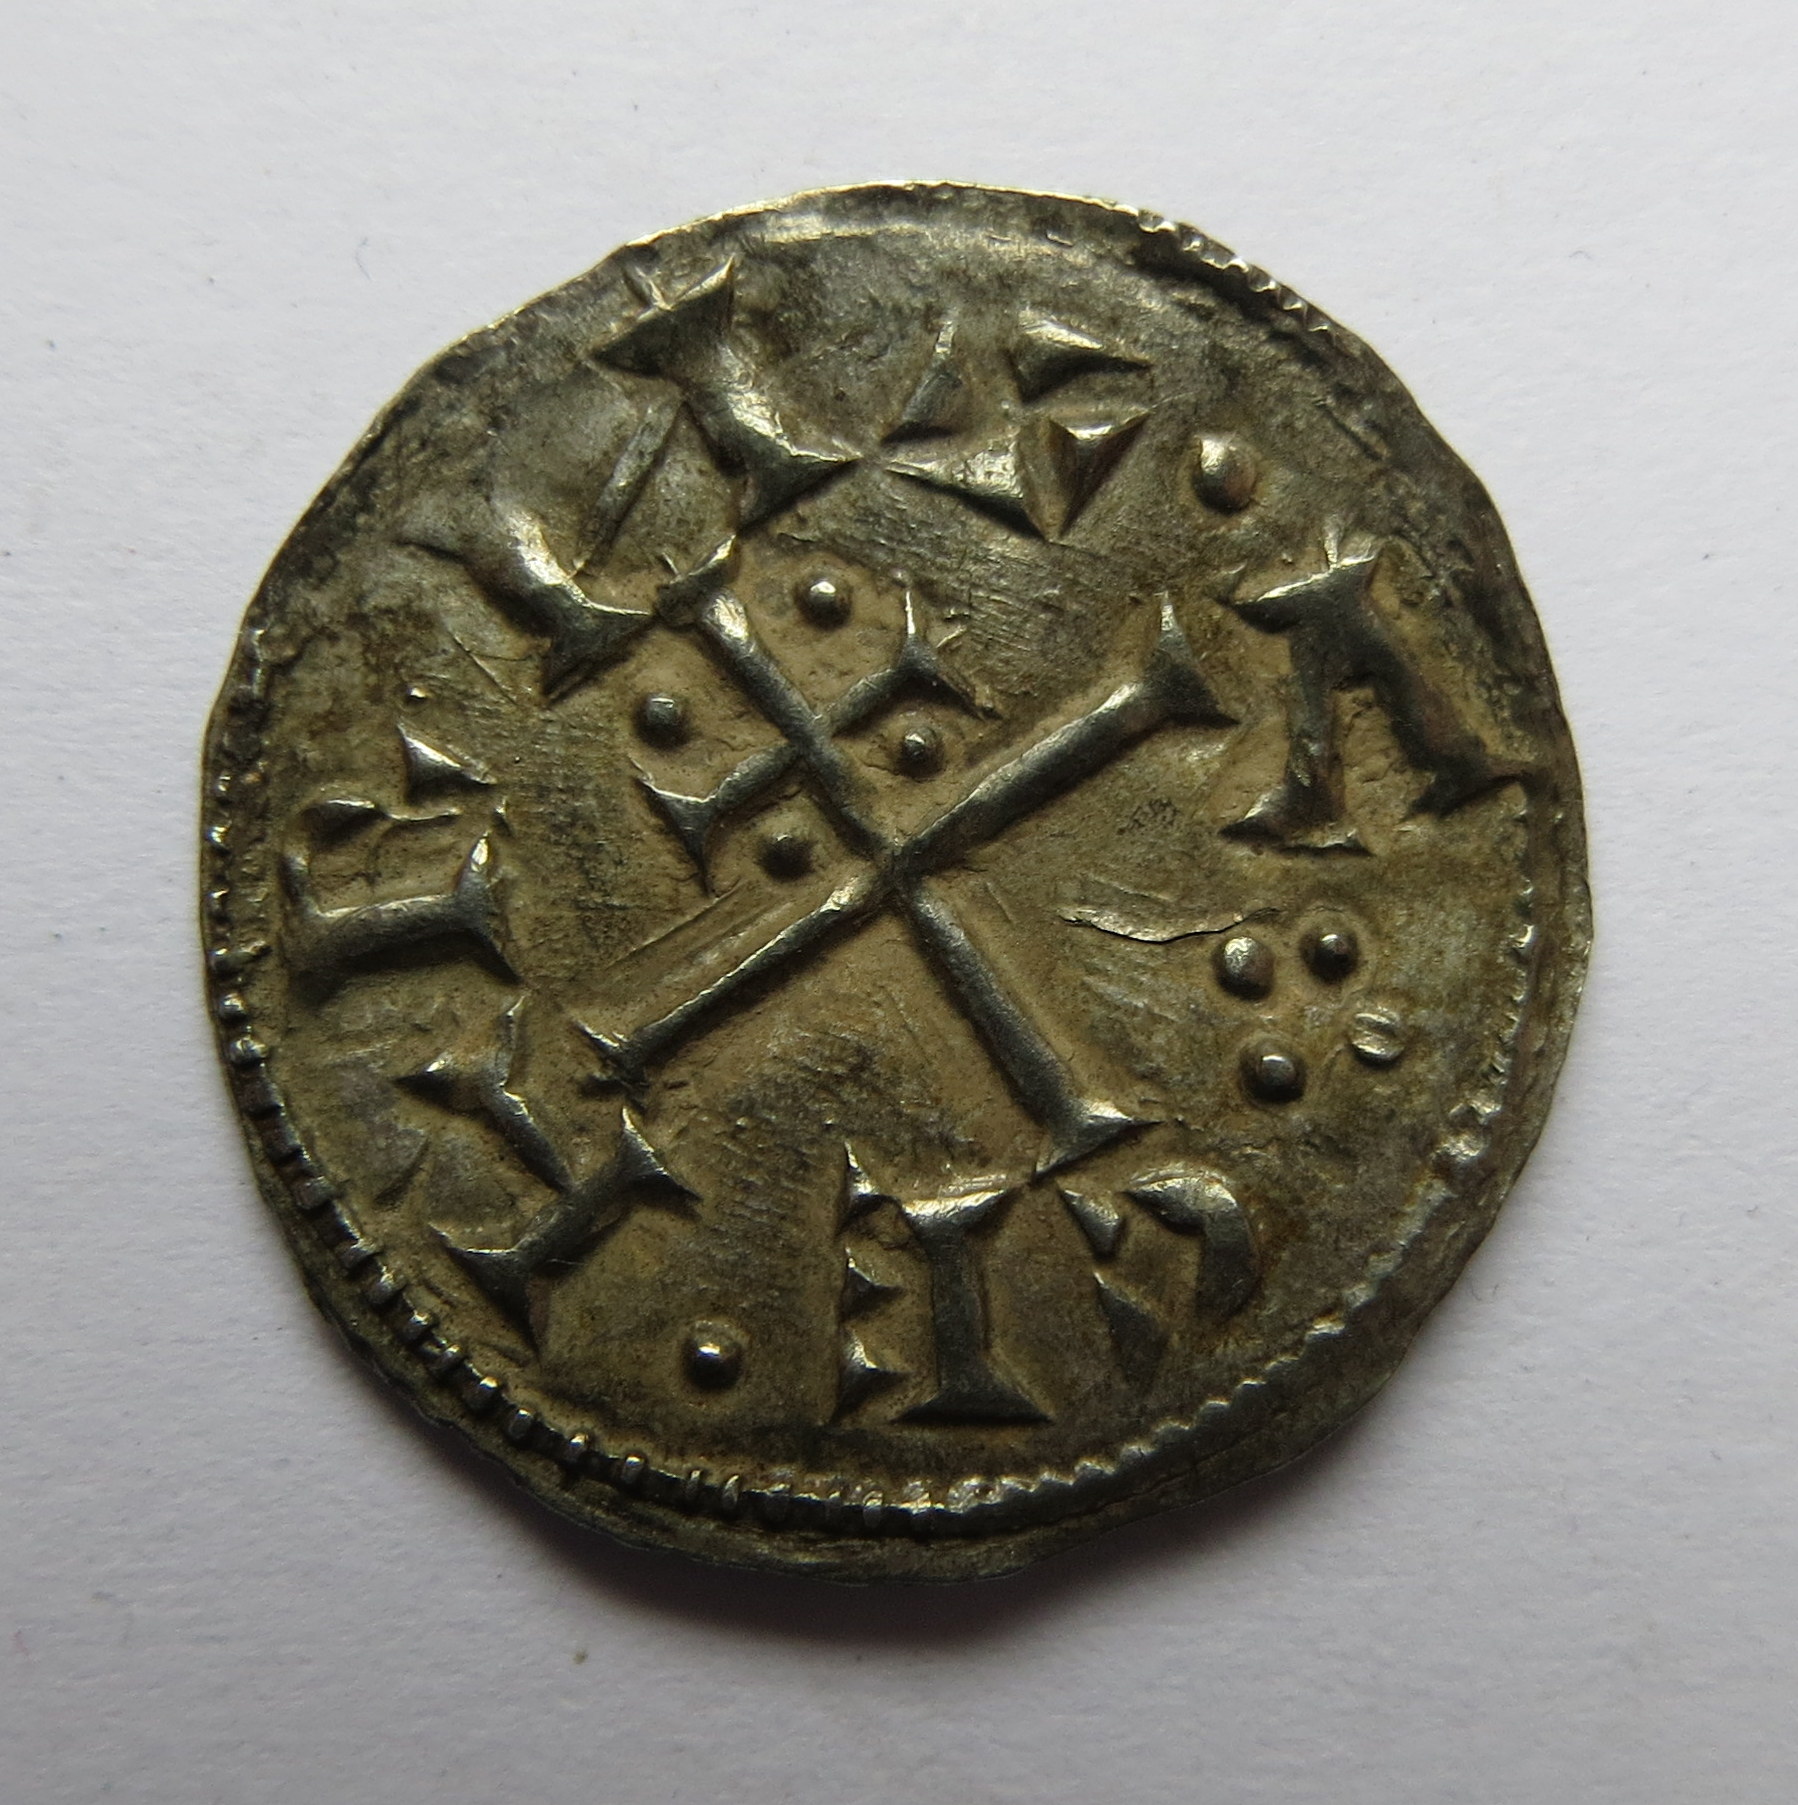 Saxon and Viking Coins for Sale | Antique Coins | Silbury Coins